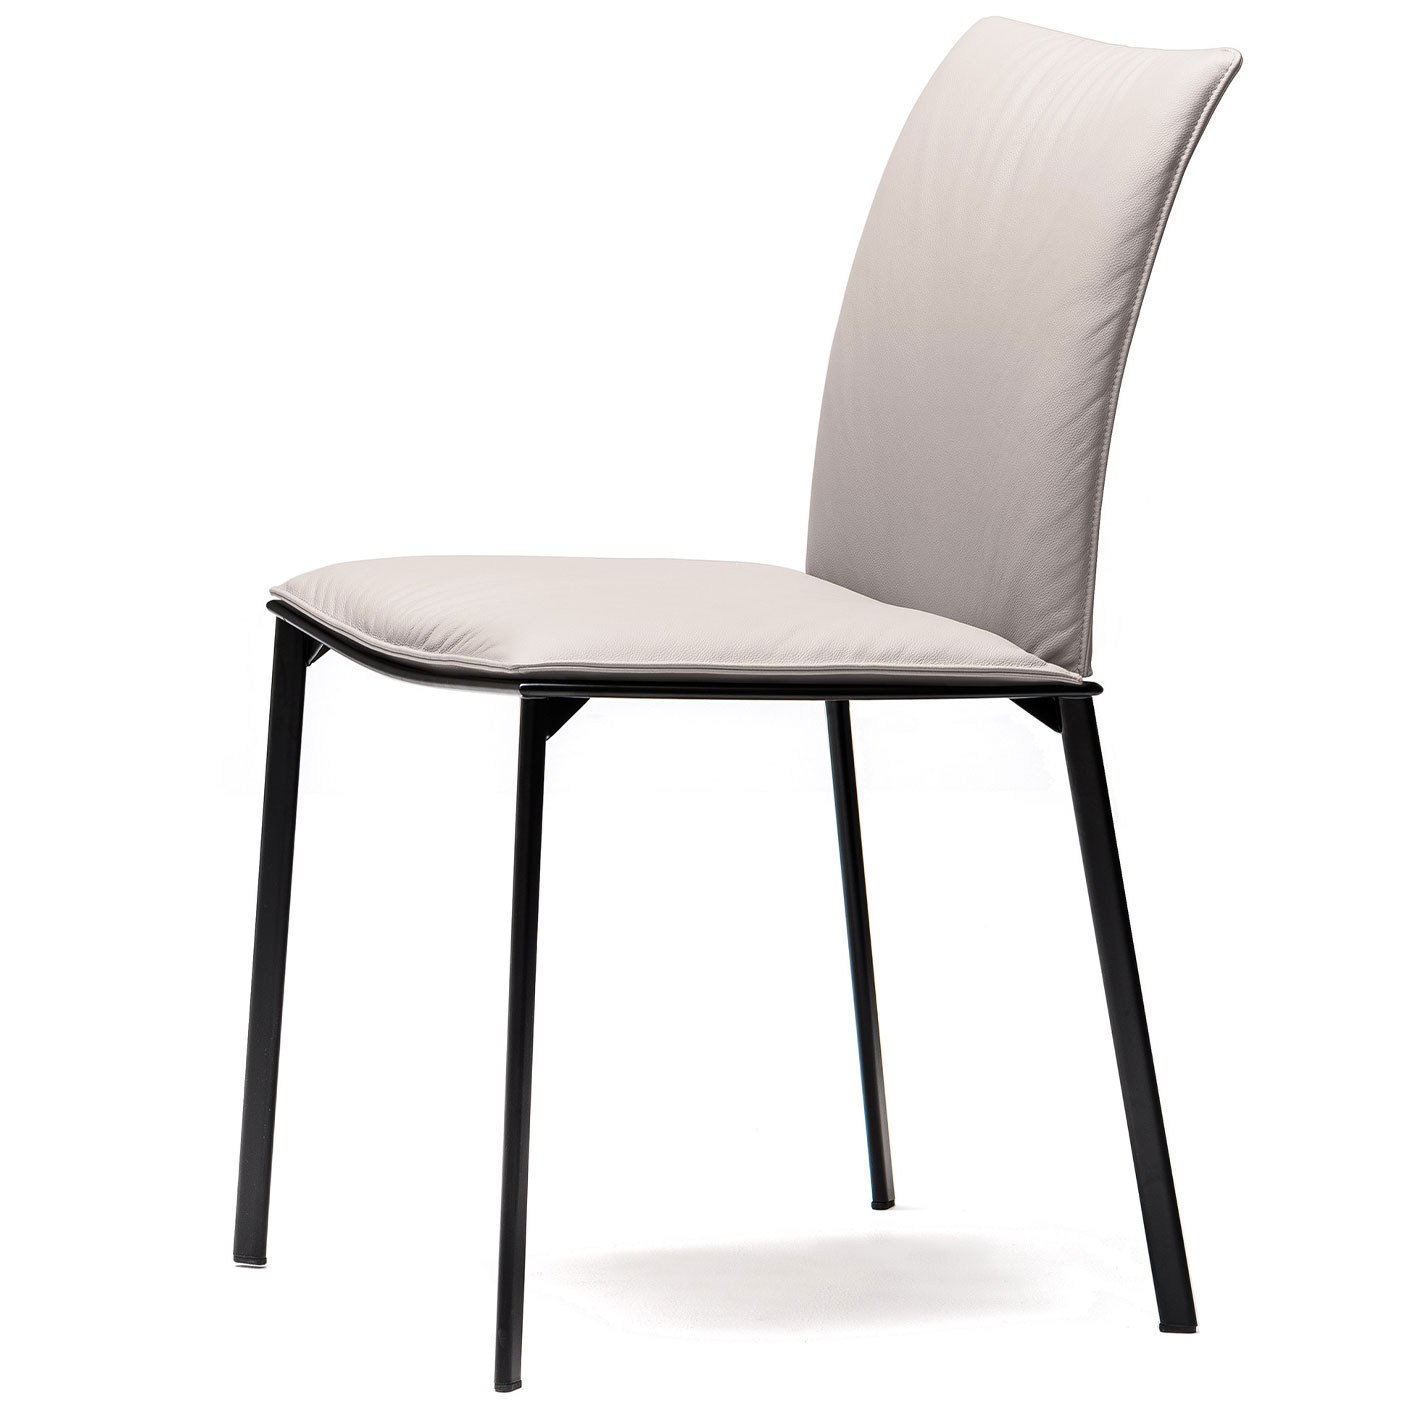 Stühle unter 500 Euro - RITA Stuhl